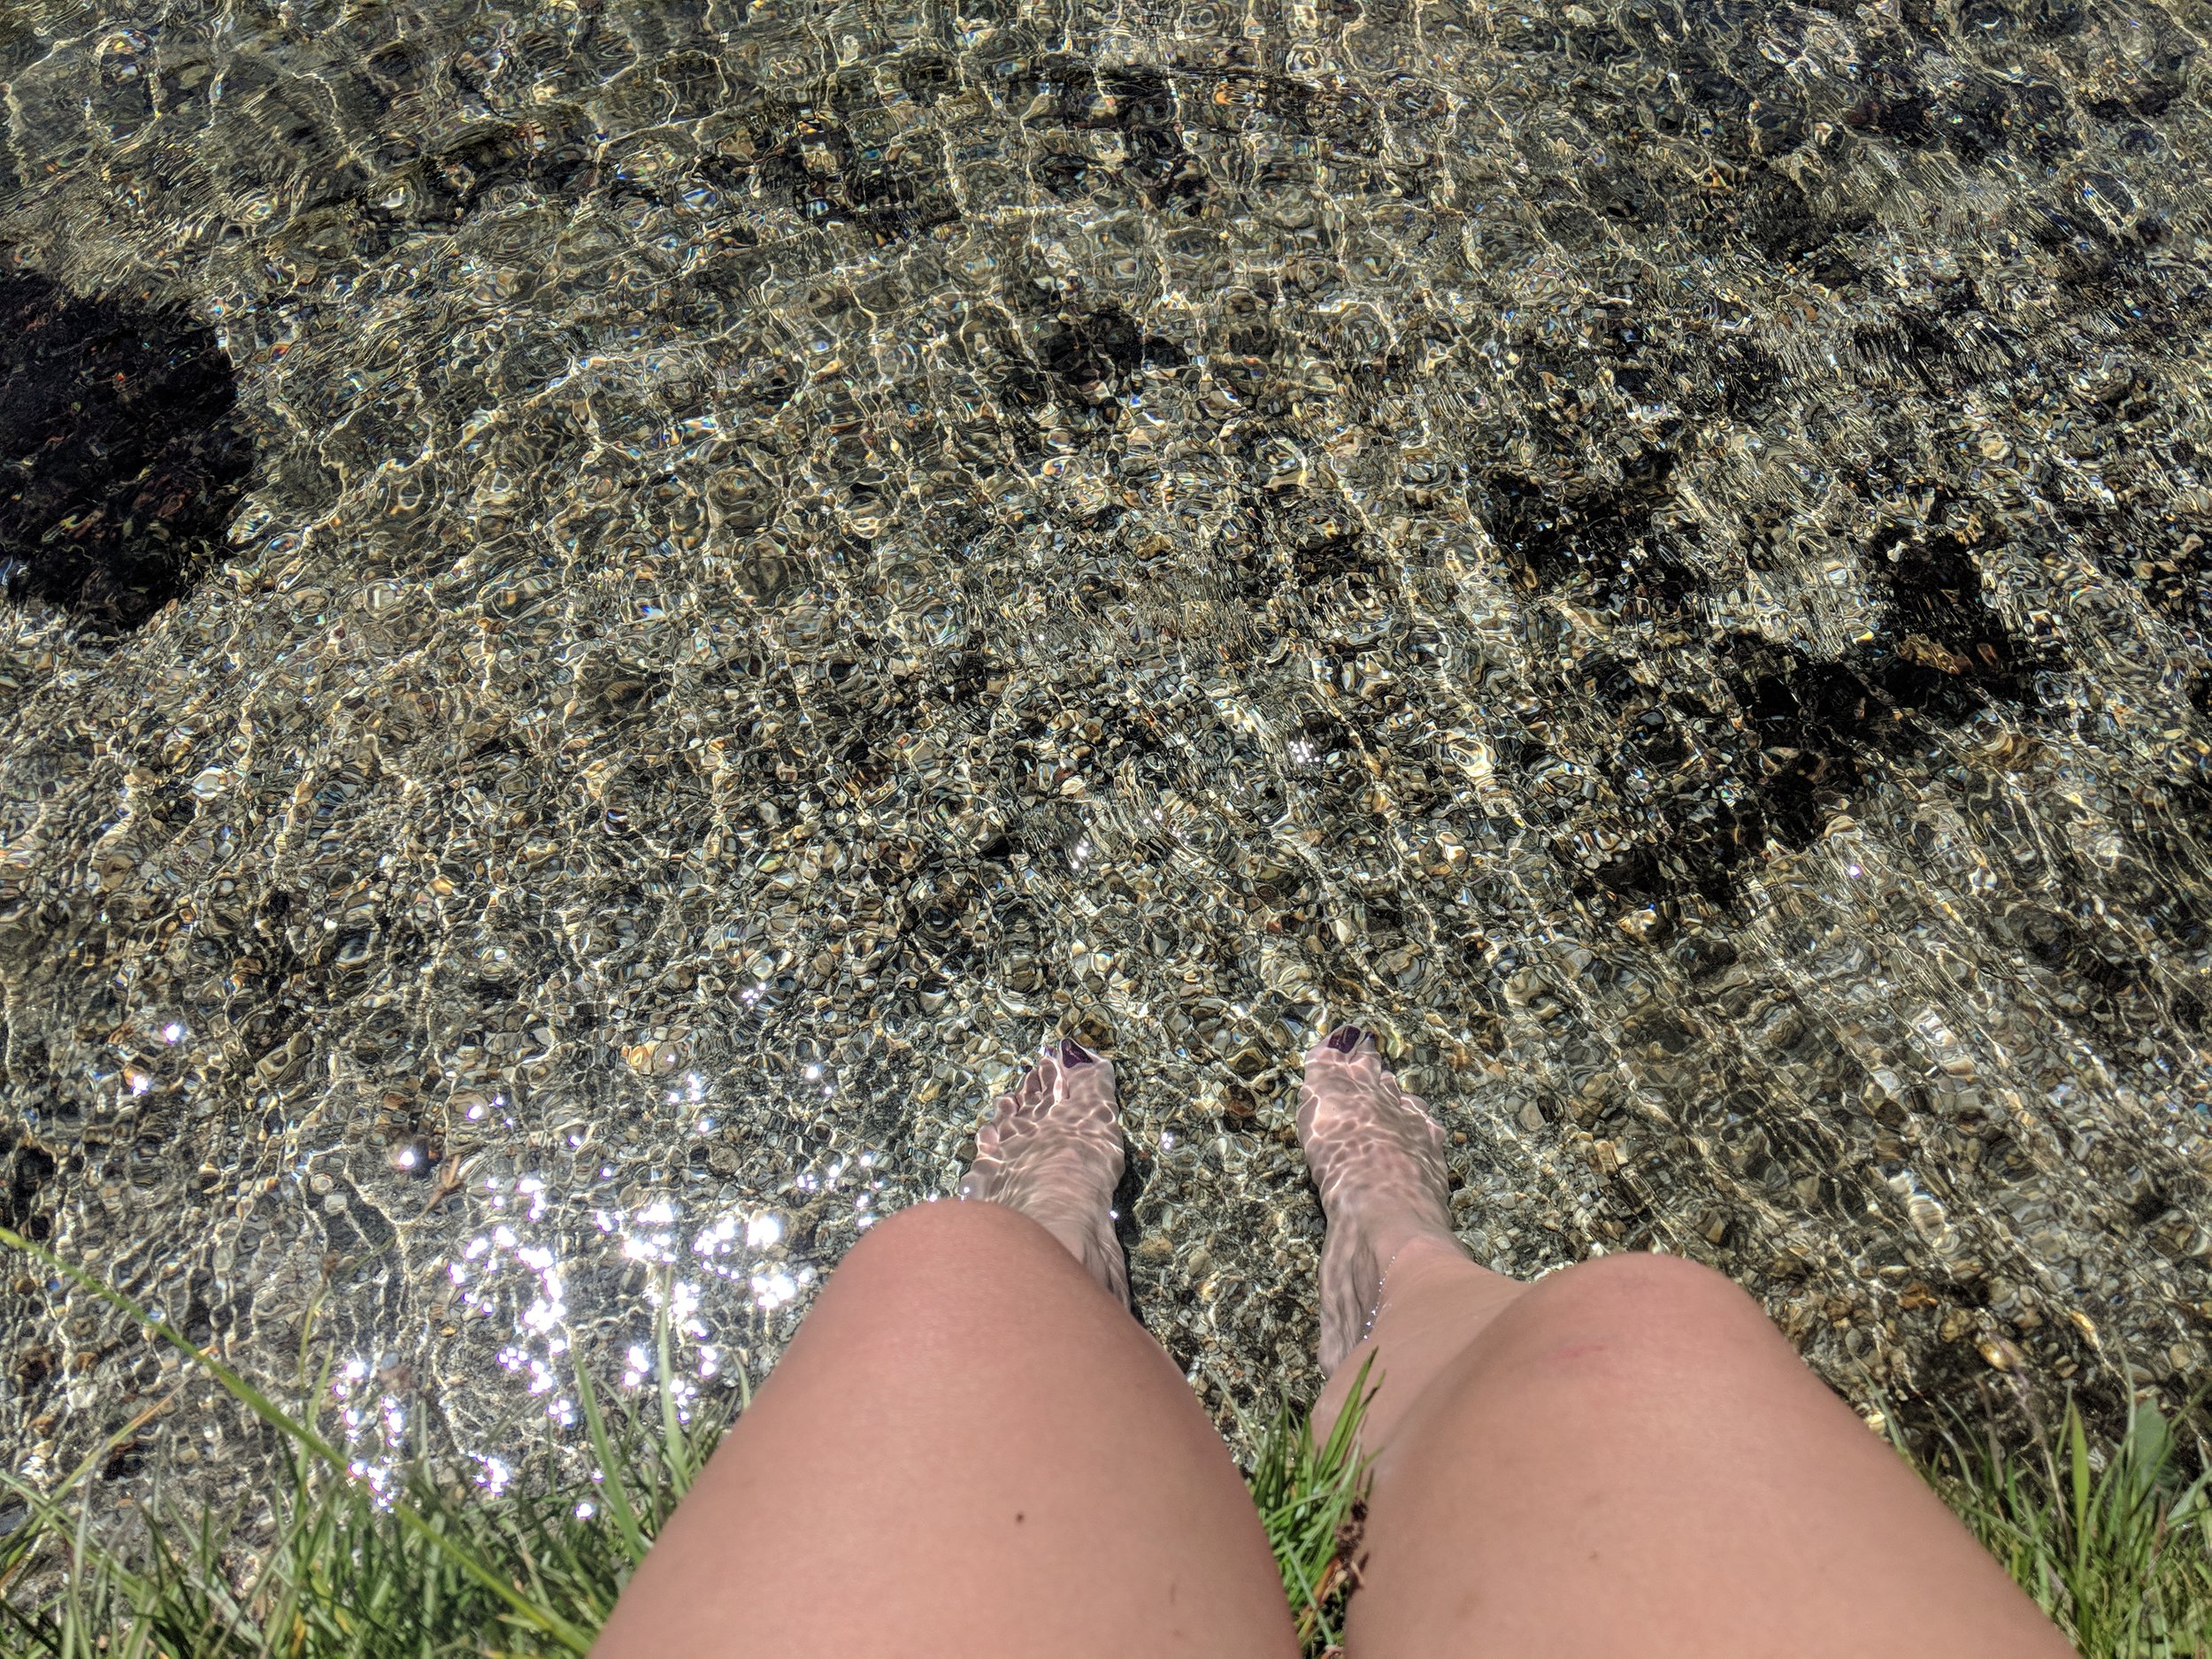 Feet soak in Palisades lakes